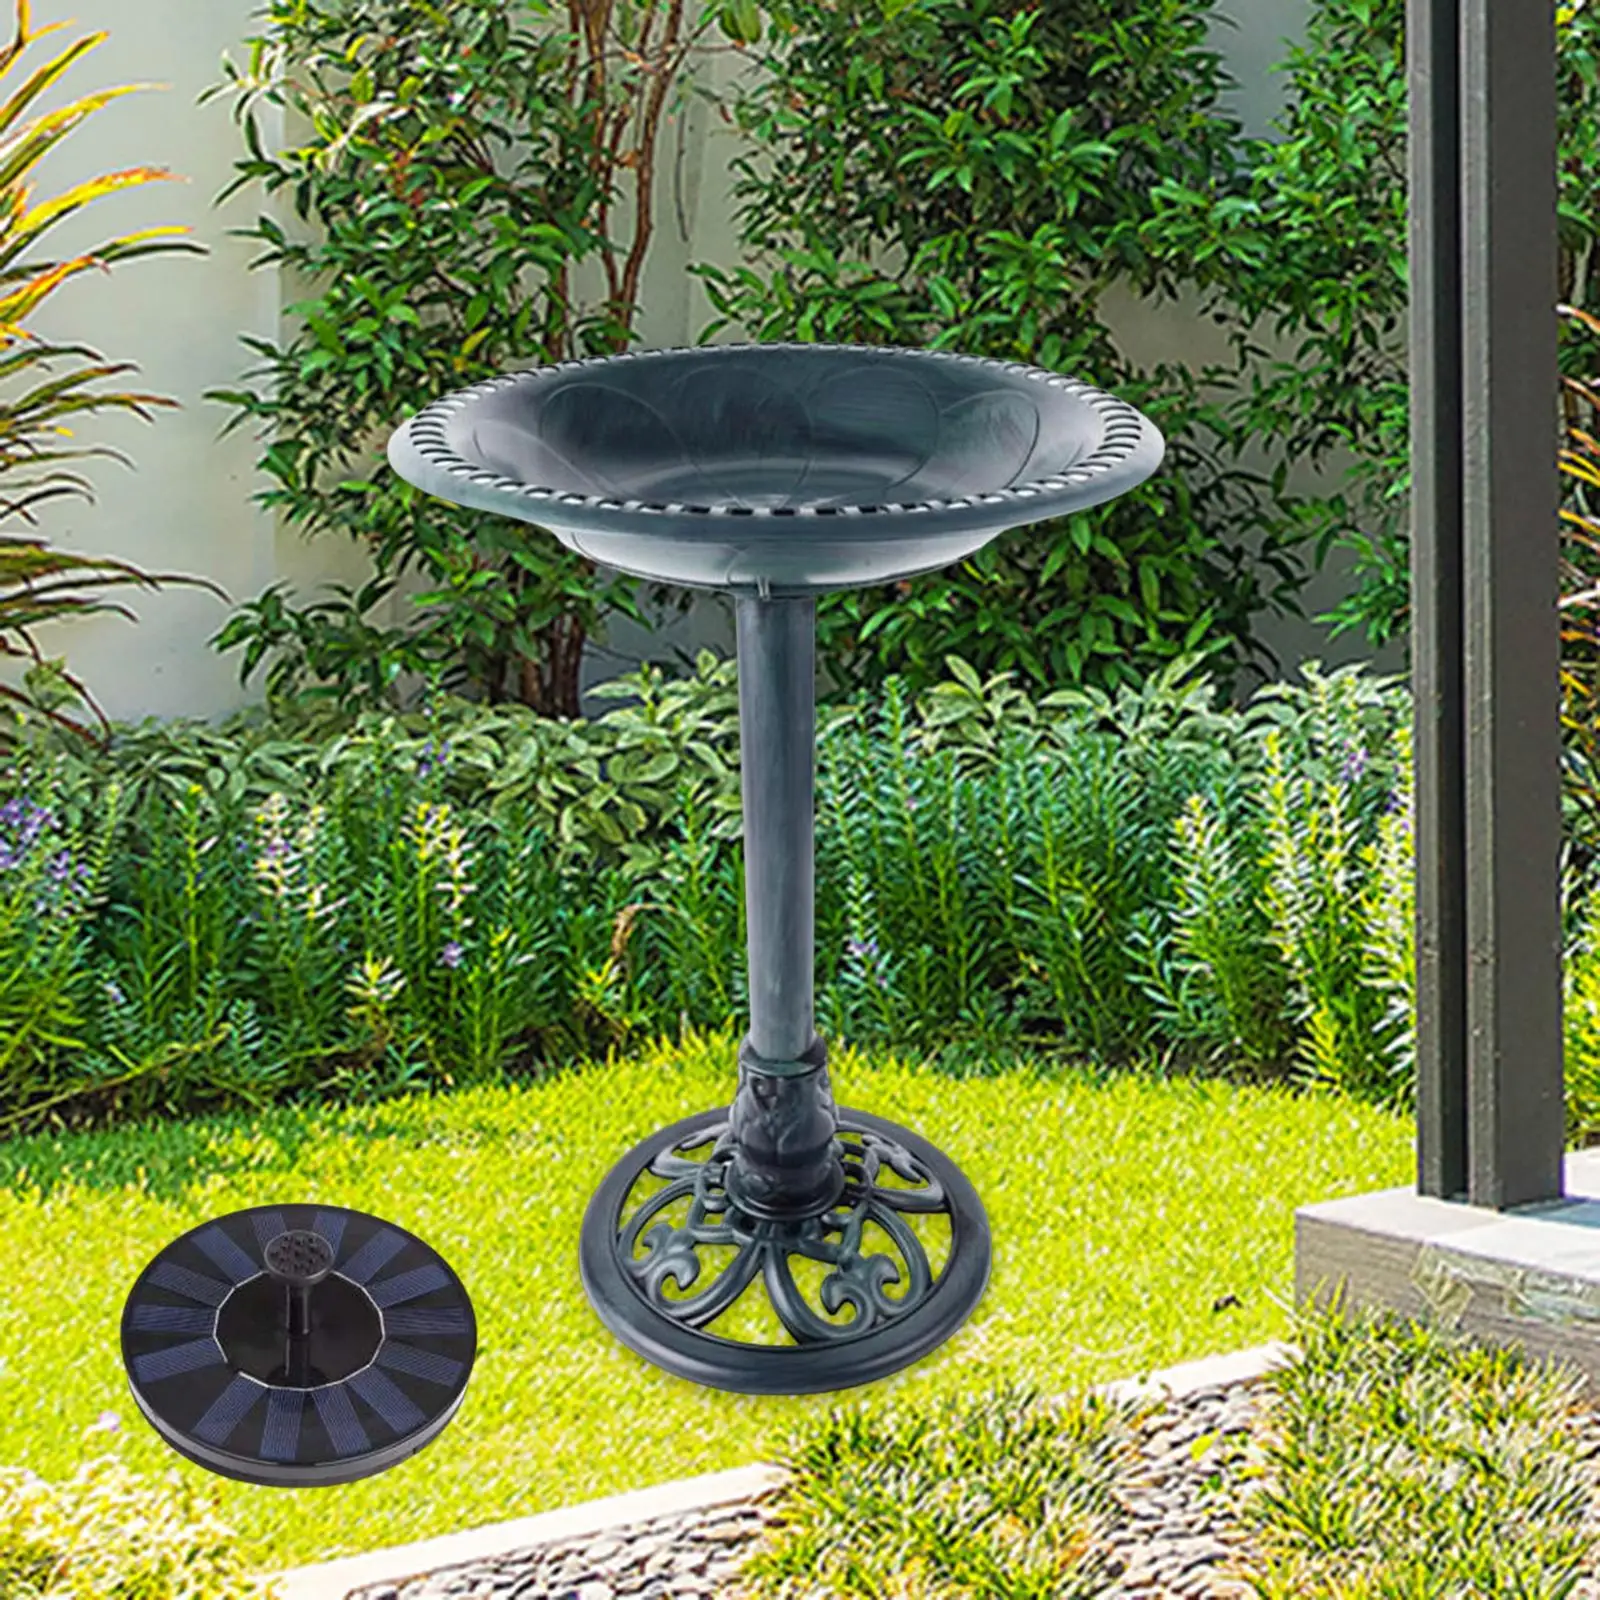 Pedestal Garden Bird Bath Decoration Water Feeder Outdoor Solar Powered water Fountain for Outside Deck Balcony Patio Courtyard